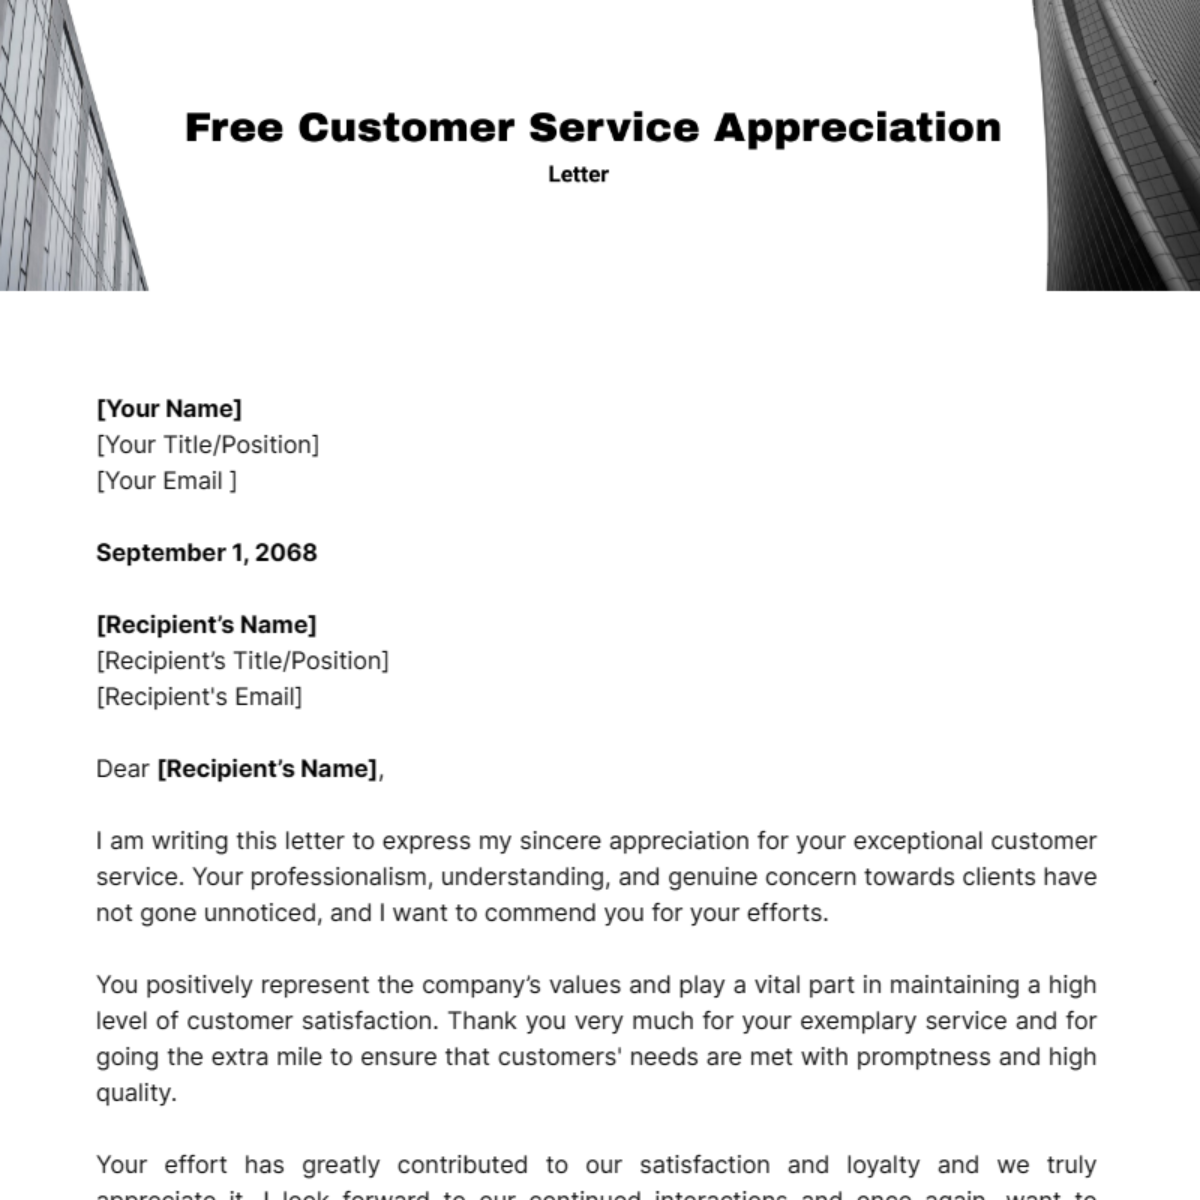 Customer Service Appreciation Letter Template